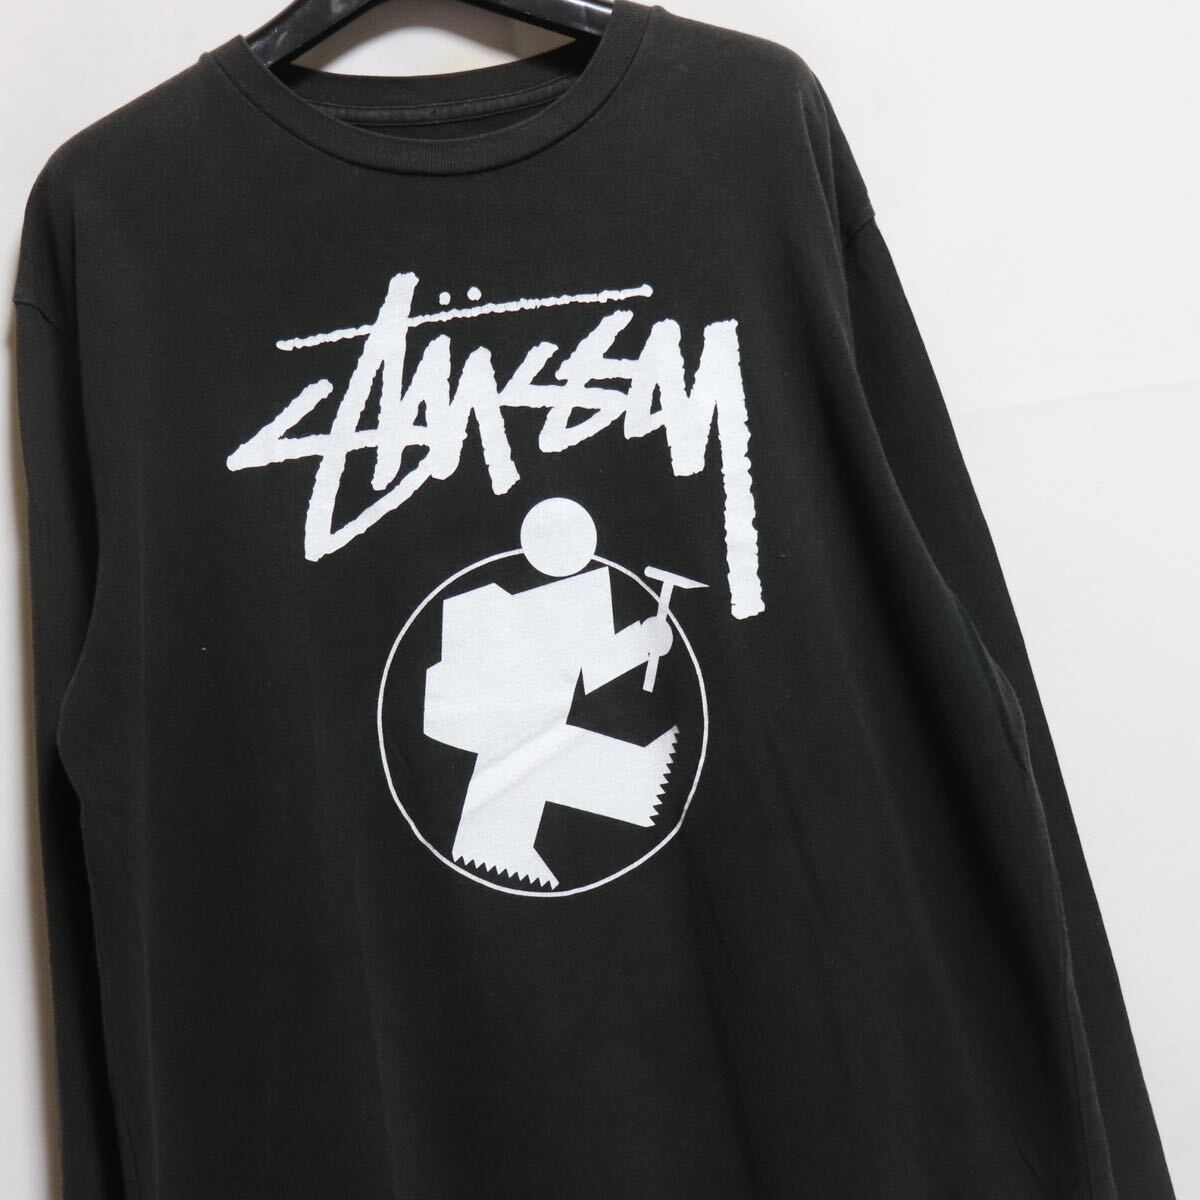  редкий [stussy] Logo трикотажный джемпер с длинным рукавом футболка / Stussy тень man 